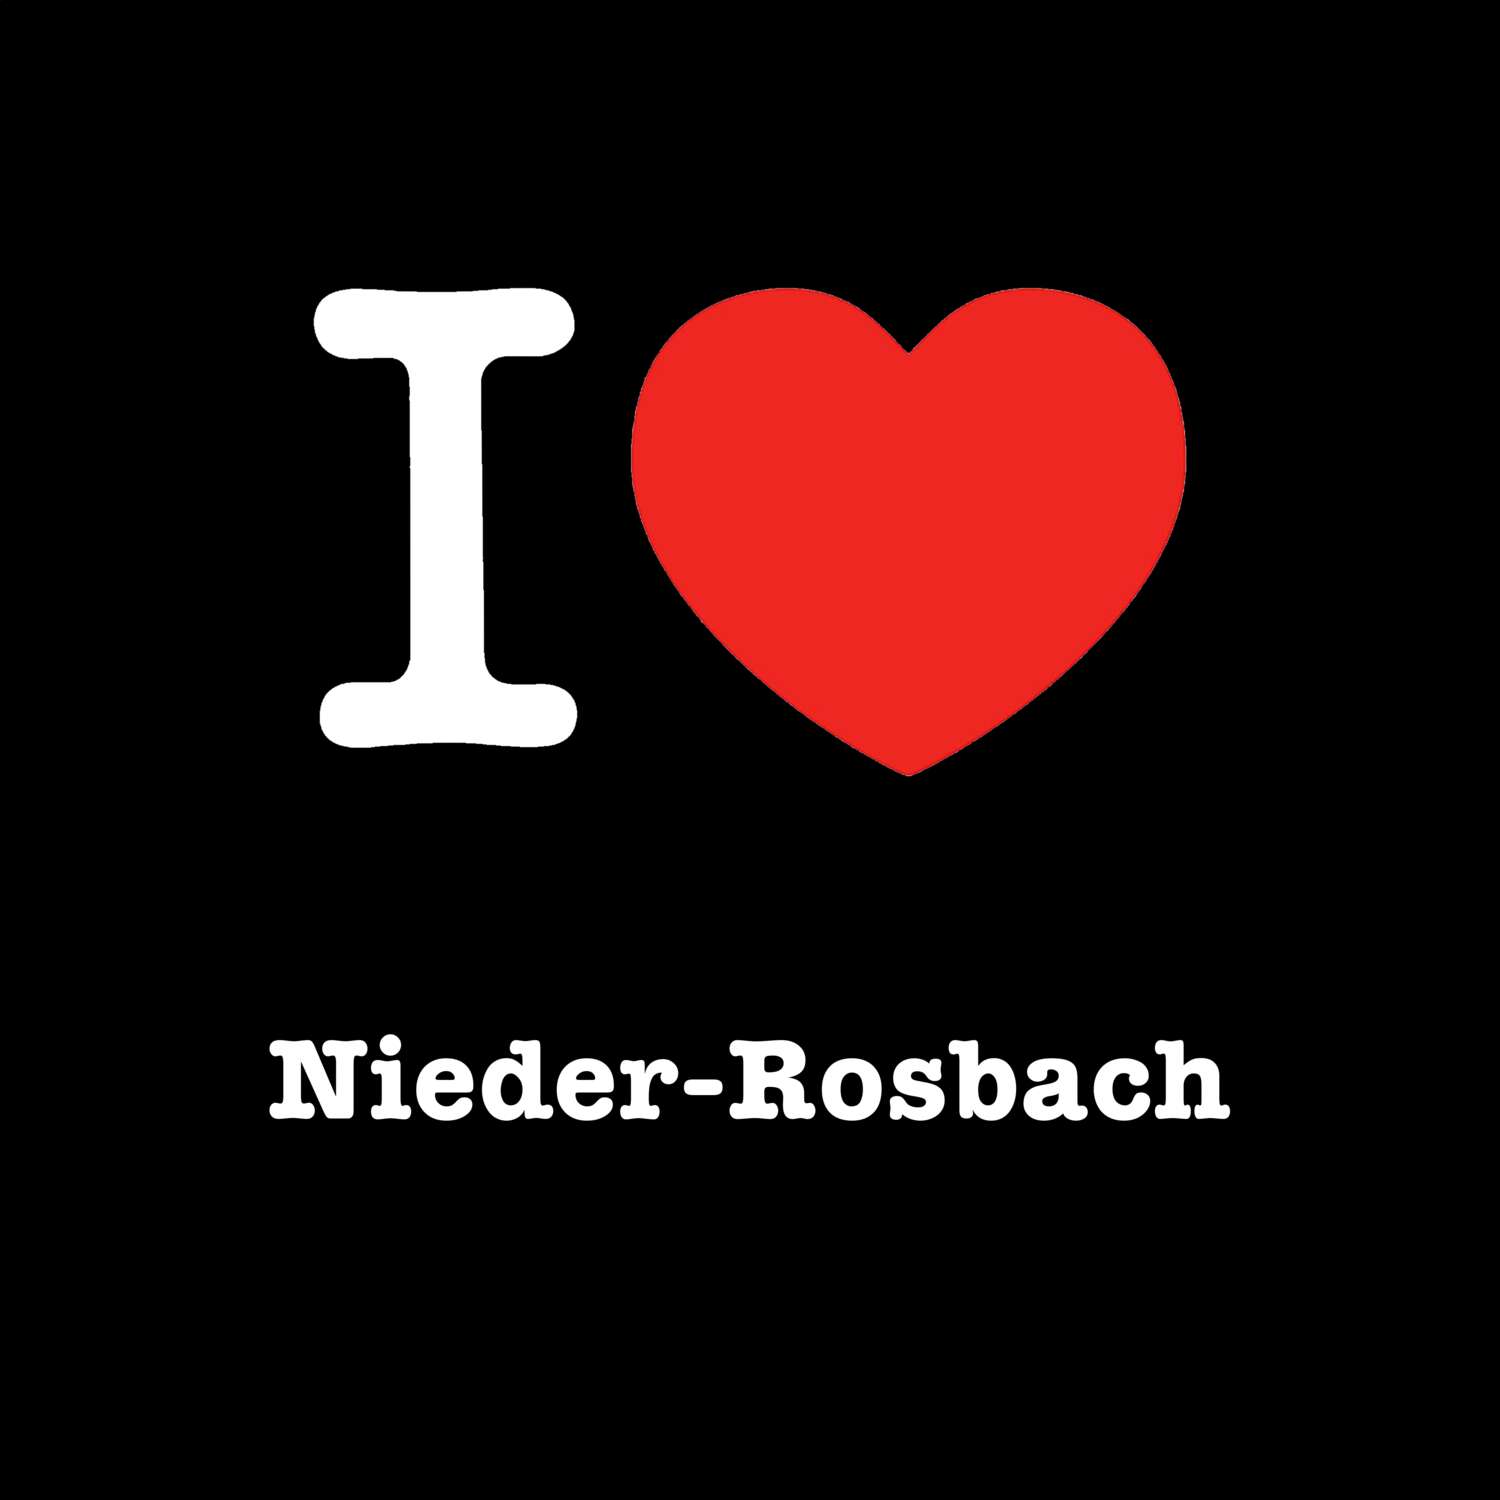 Nieder-Rosbach T-Shirt »I love«